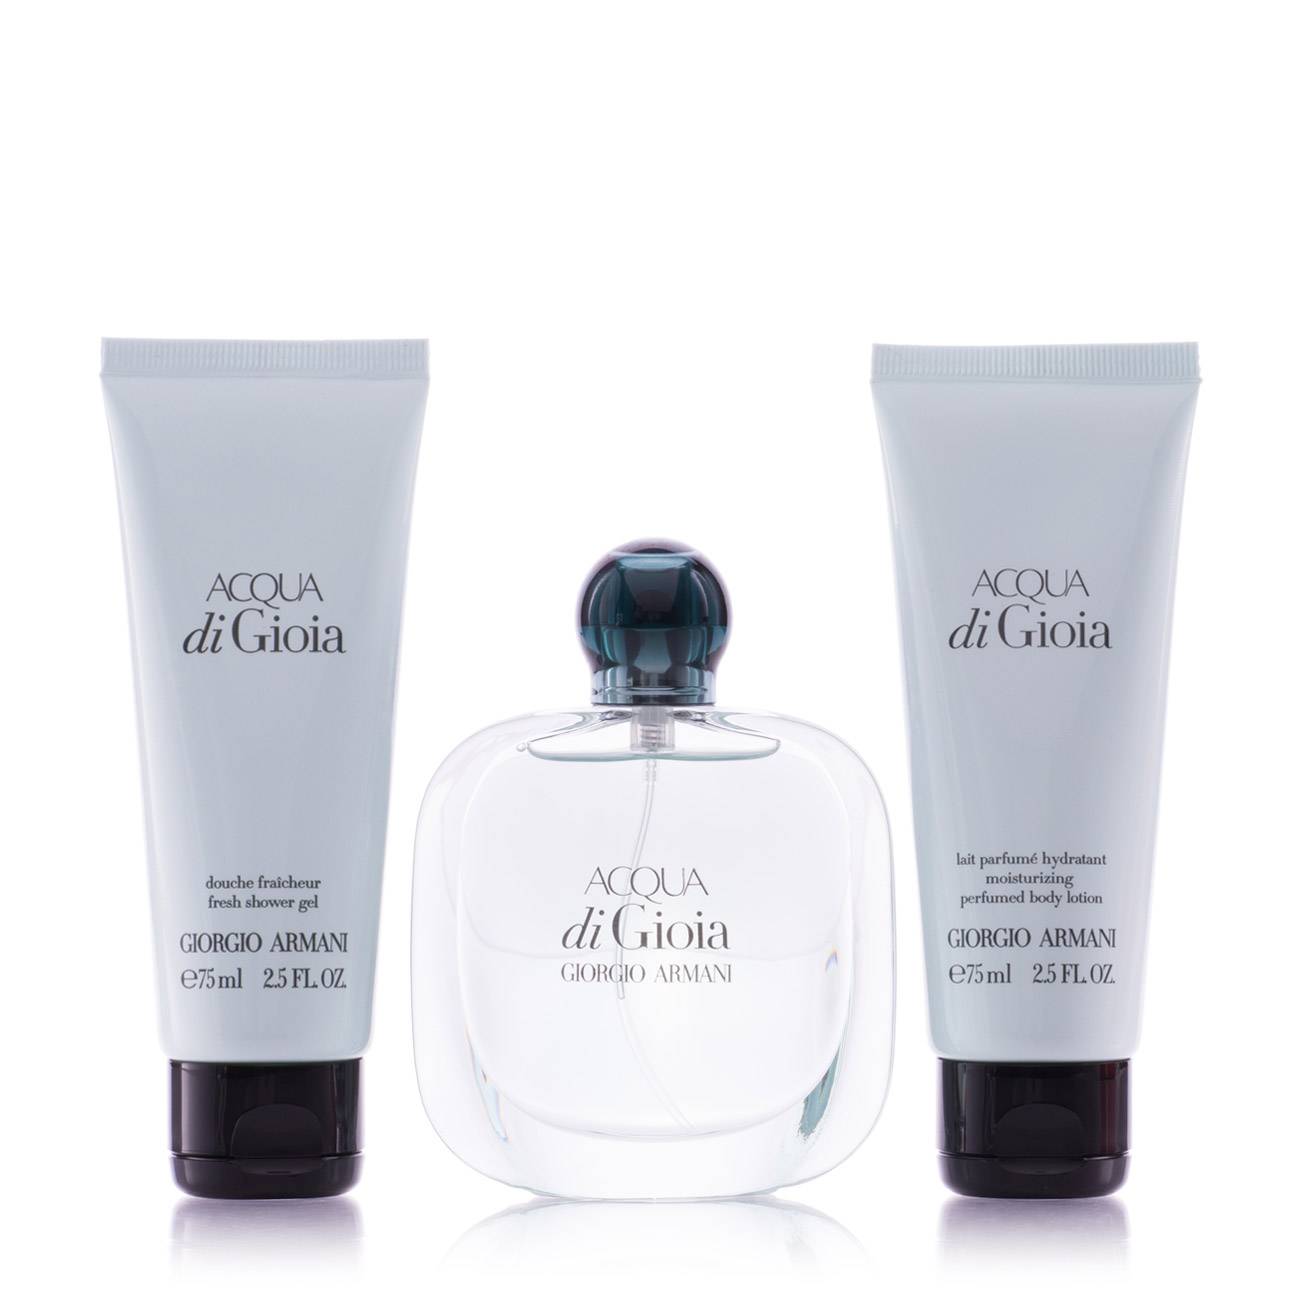 Set parfumuri Giorgio Armani ACQUA DI GIOIA SET 200ml cu comanda online